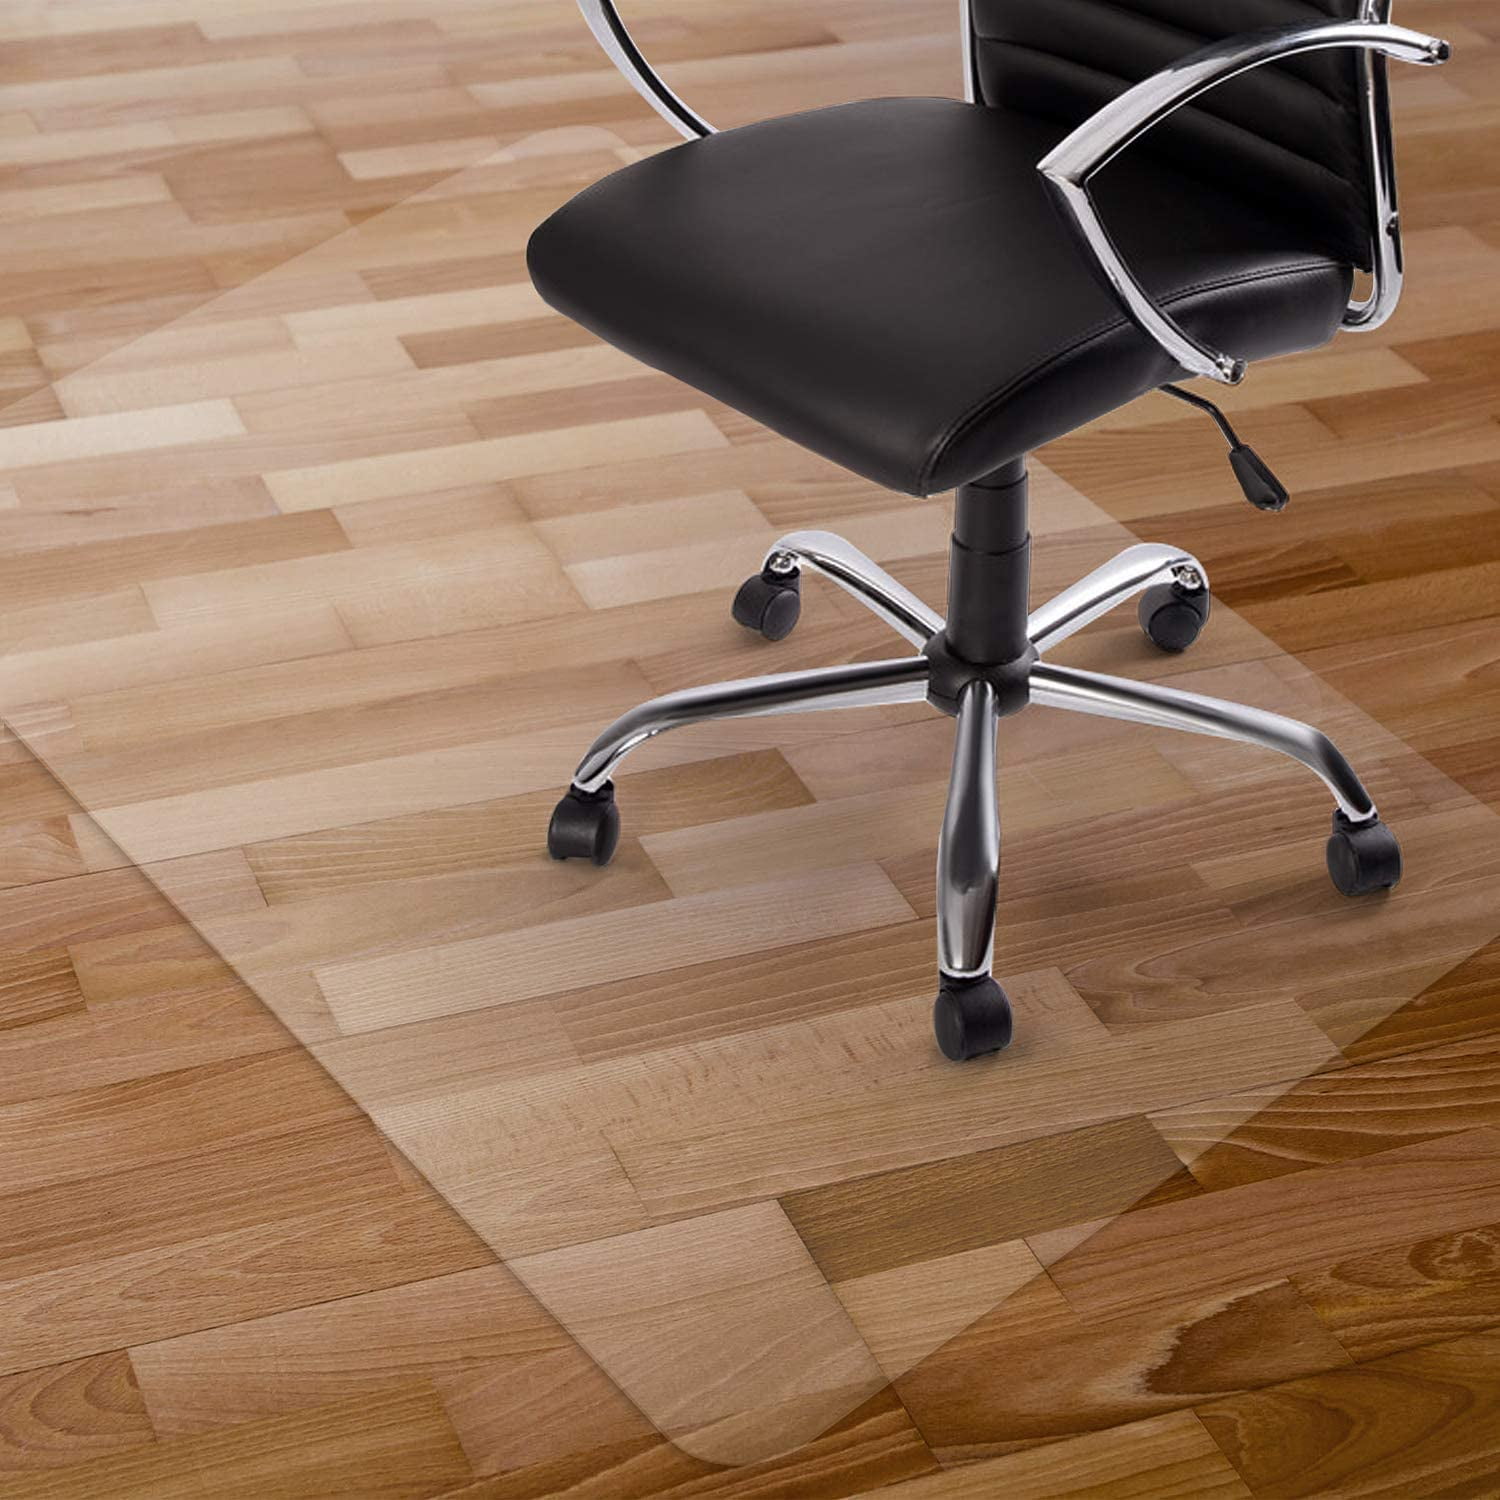 Kuyal Clear Chair Mat Hard Floor Use, Office Depot Chair Mat Hardwood Floor